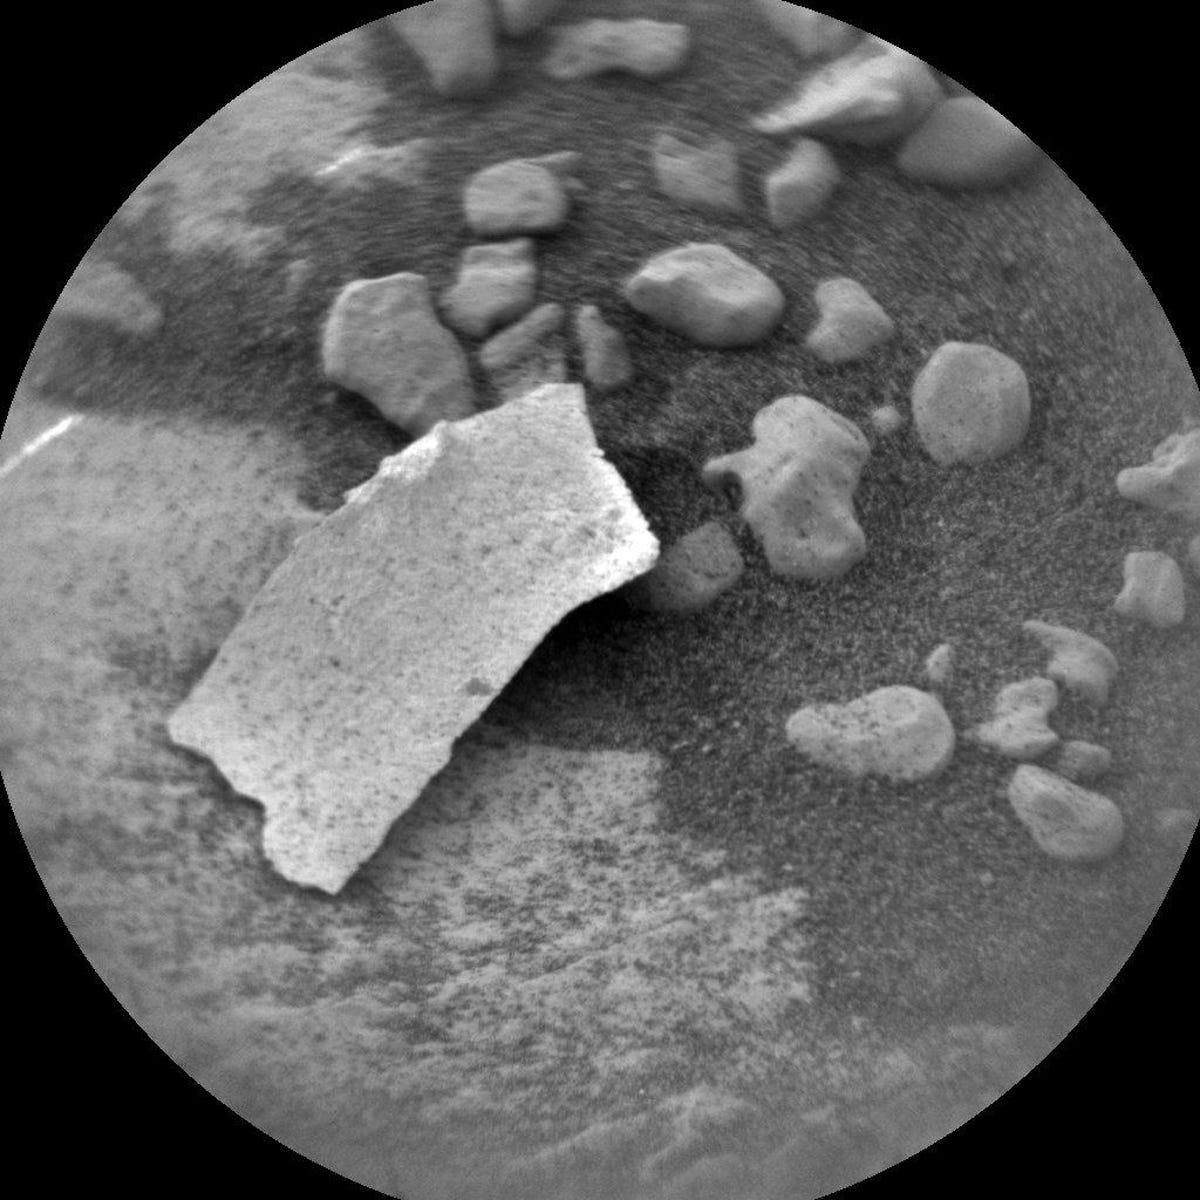 Flaky piece of Martian rock looks like a slice of dried coconut.